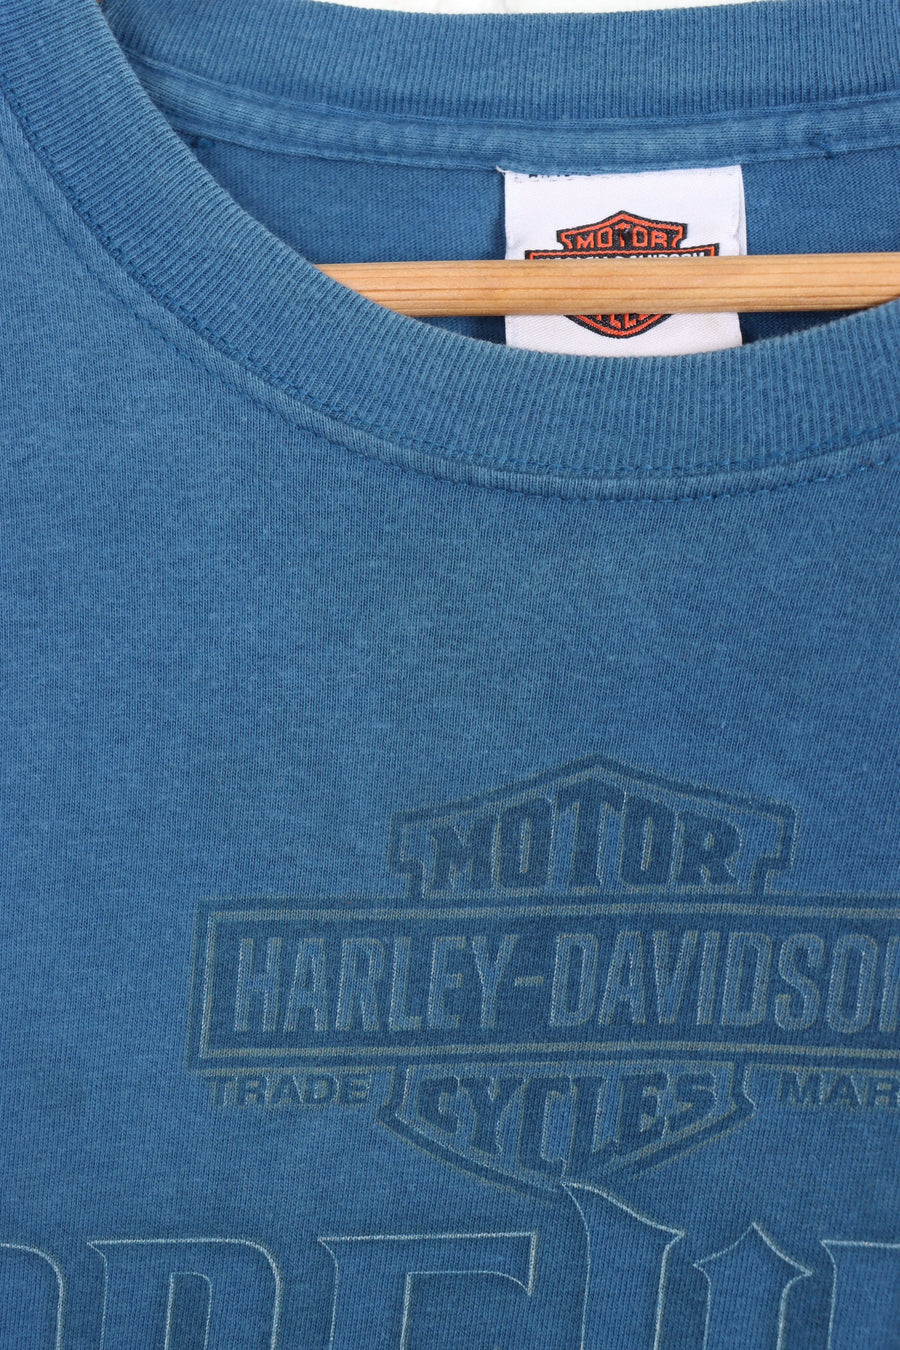 HARLEY DAVISON Blue 'Screw It, Lets Ride' Texas USA Made Tee (L-XL)